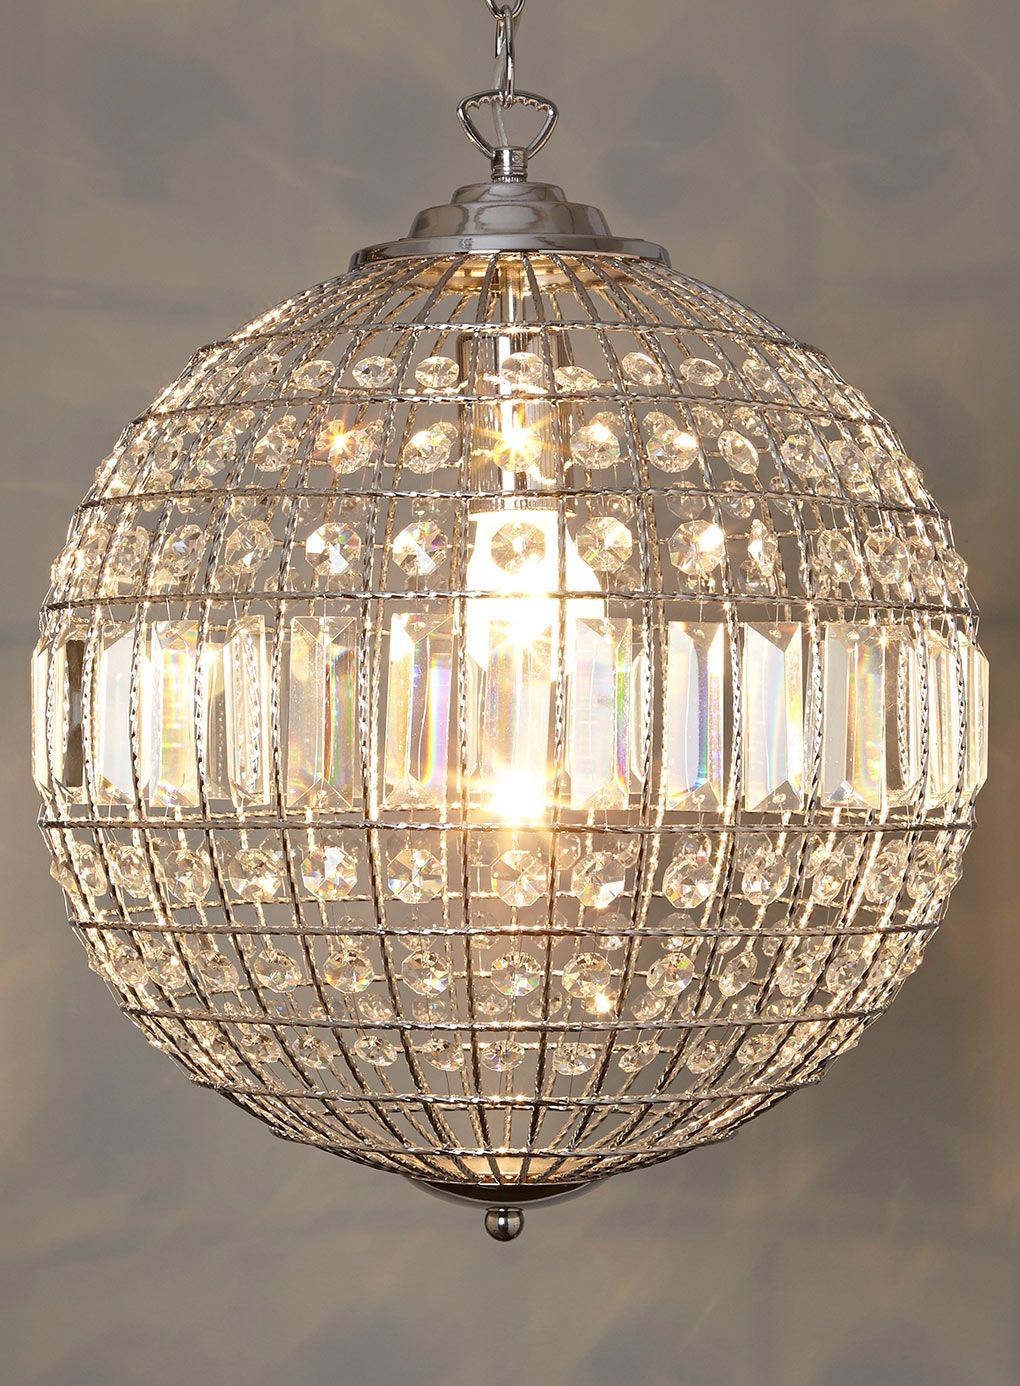 Crystal Globe Pendant Light Roselawnlutheran For Crystal Globe Chandelier (View 15 of 15)